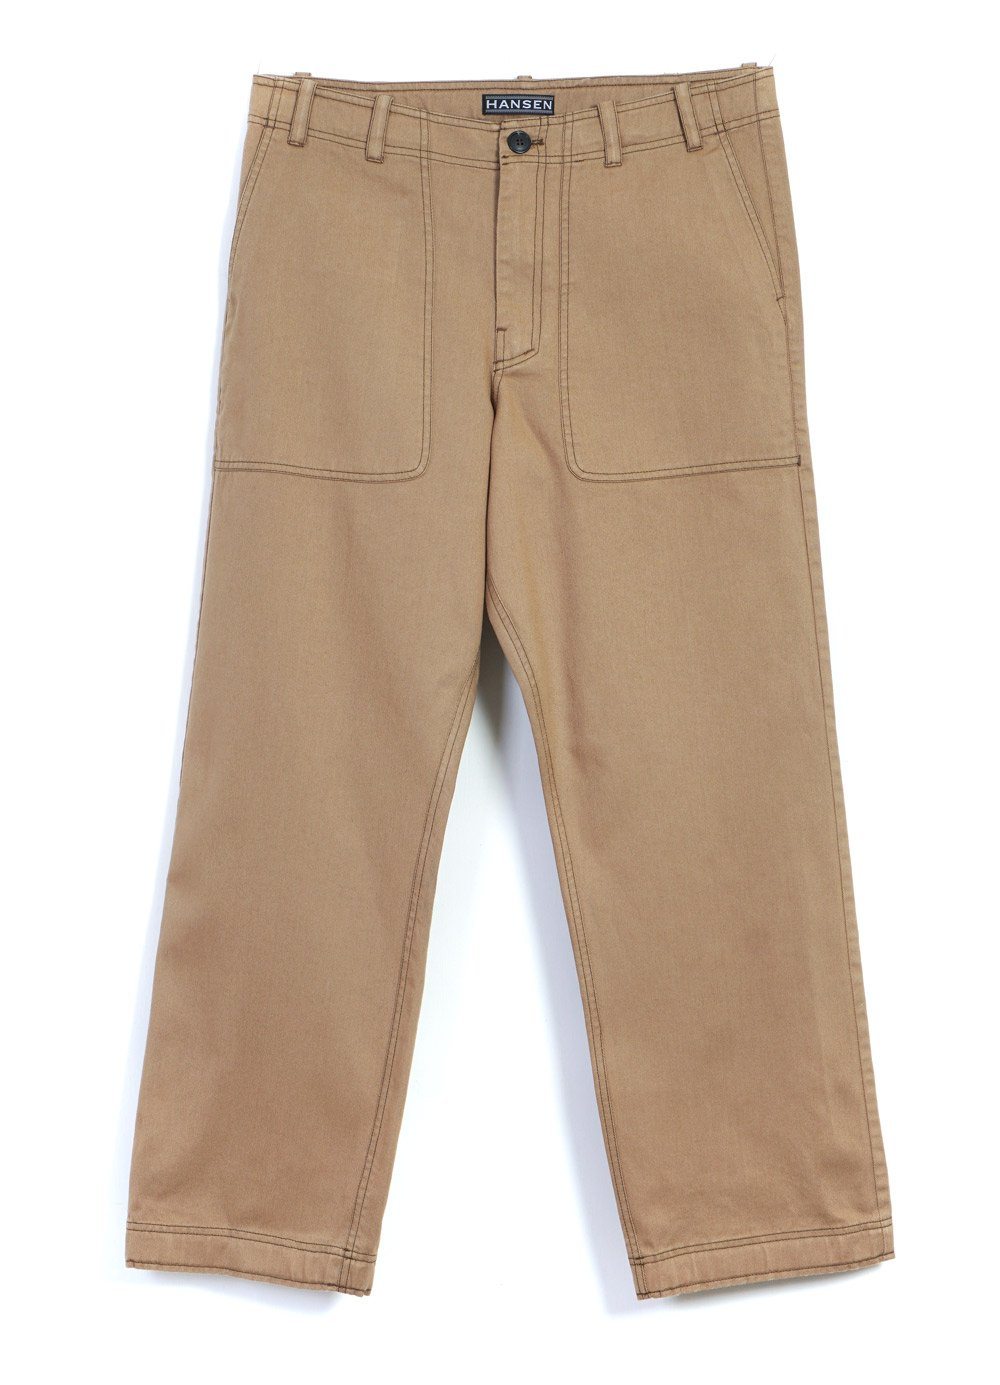 HANSEN GARMENTS - VILLE | Loose Fit Trousers | Cardboard - HANSEN Garments